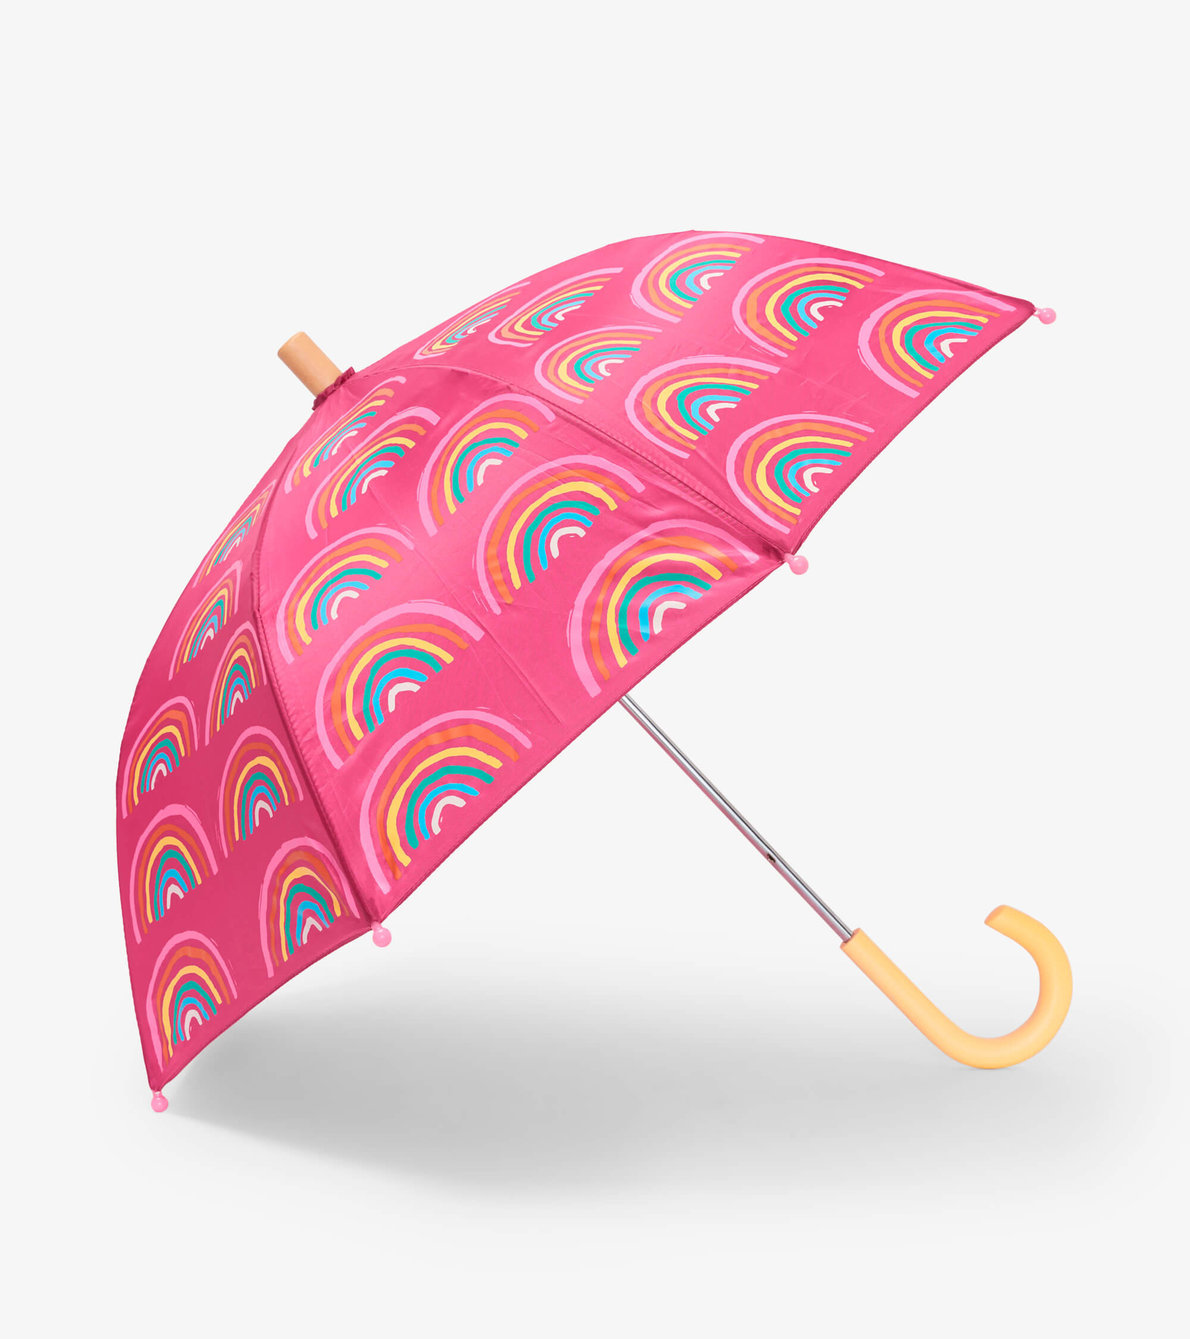 View larger image of Rainy Rainbows Umbrella